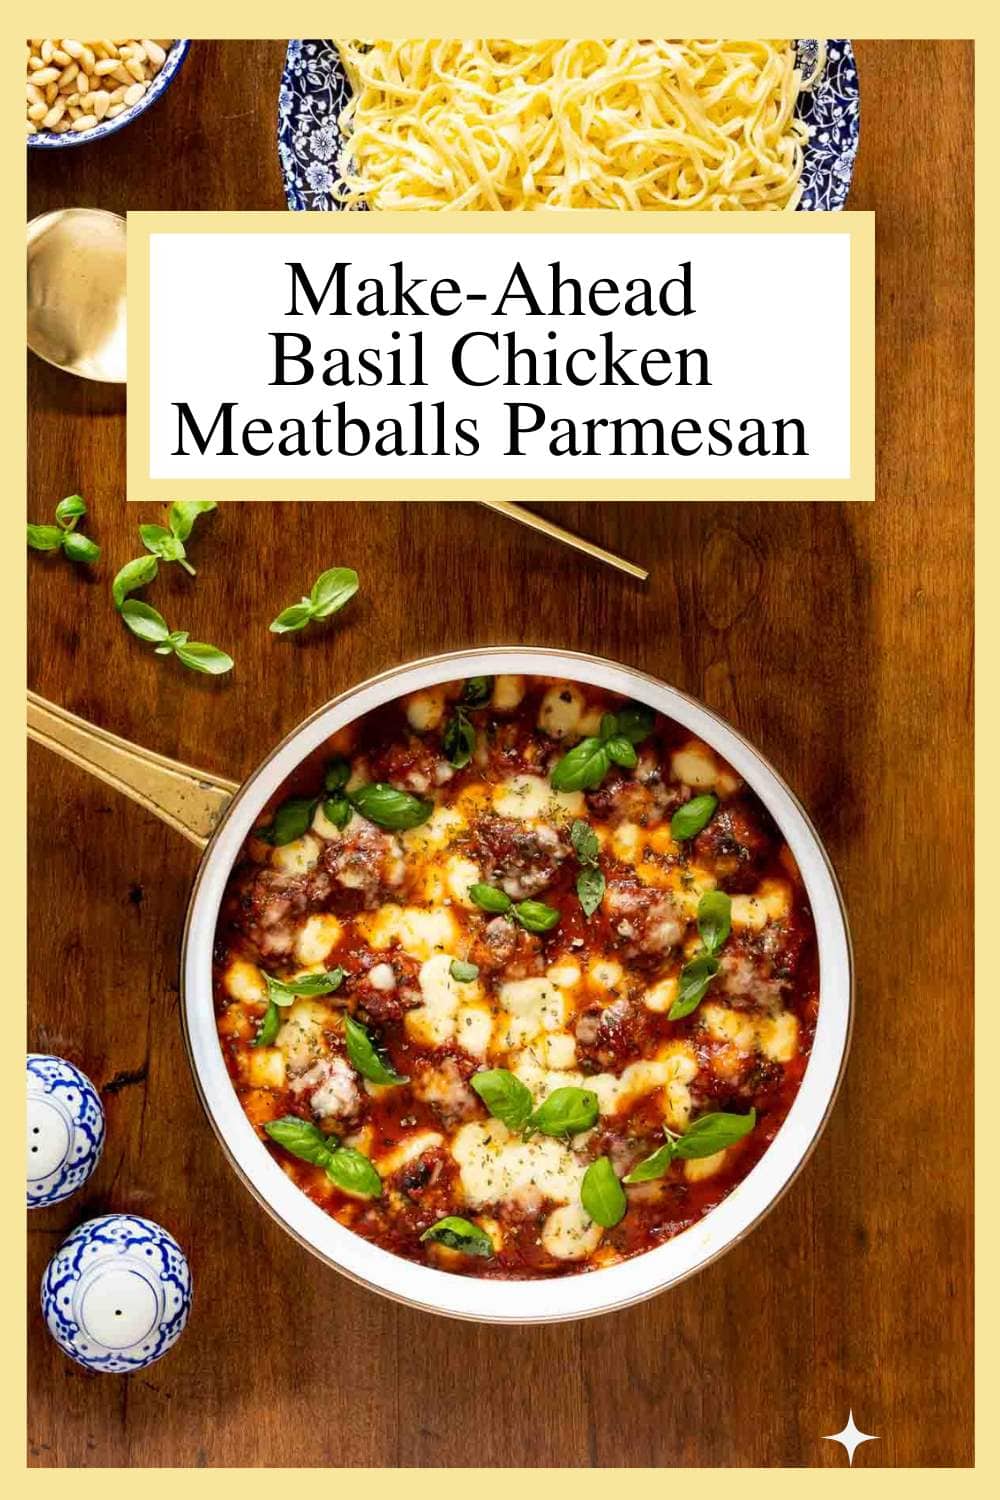 Make-Ahead Basil Chicken Meatballs Parmesan